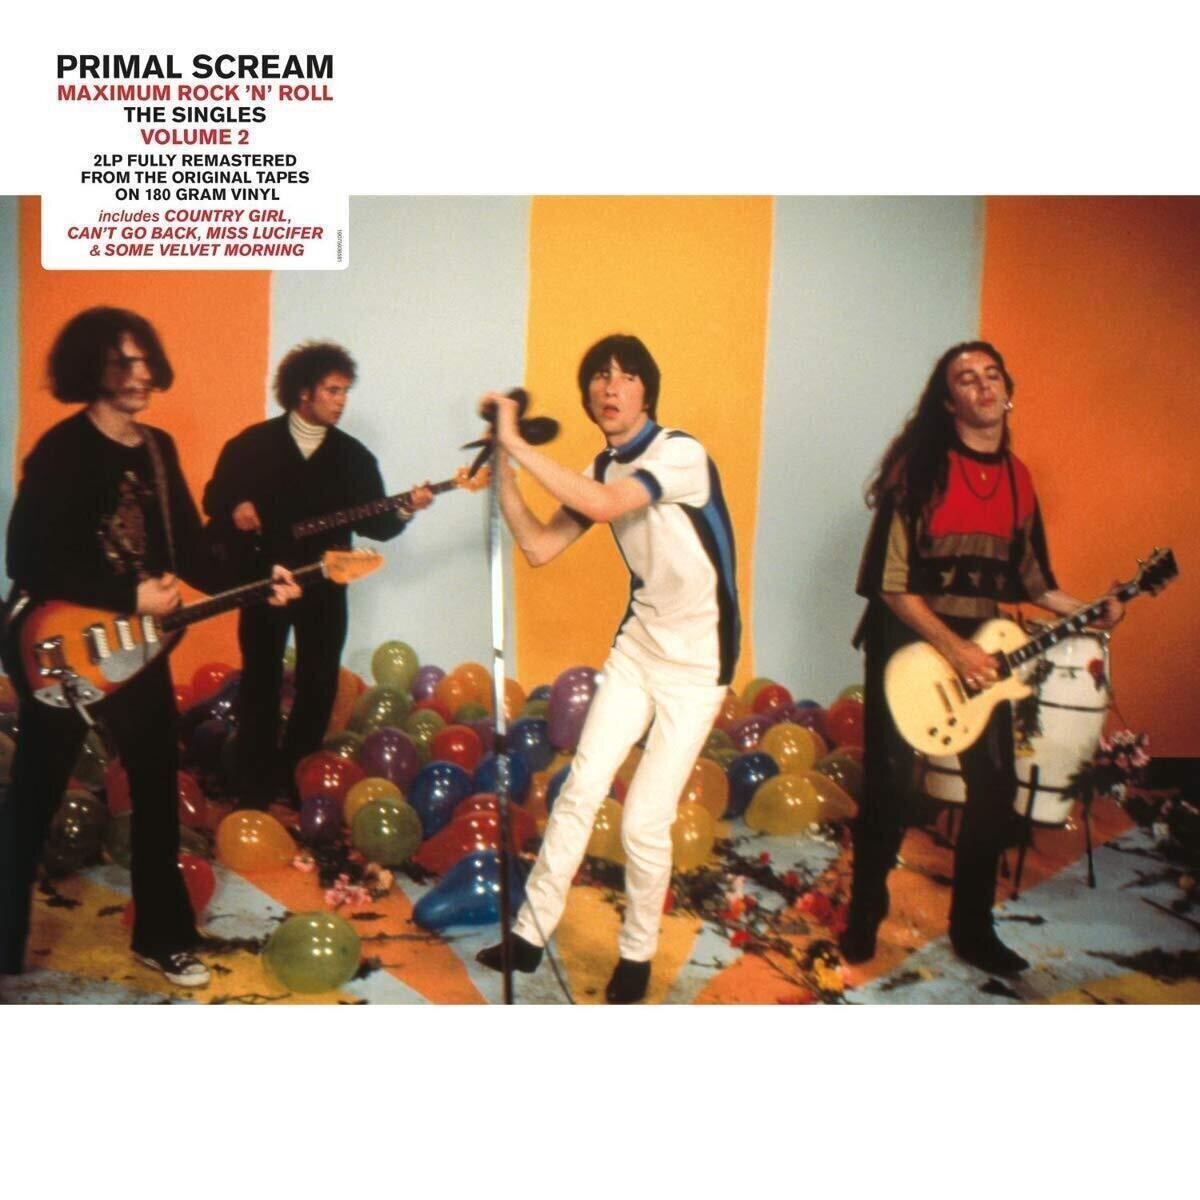 Vinylplade Primal Scream - Maximum Rock 'N' Roll: the Singles Vol. 2 (2 LP)